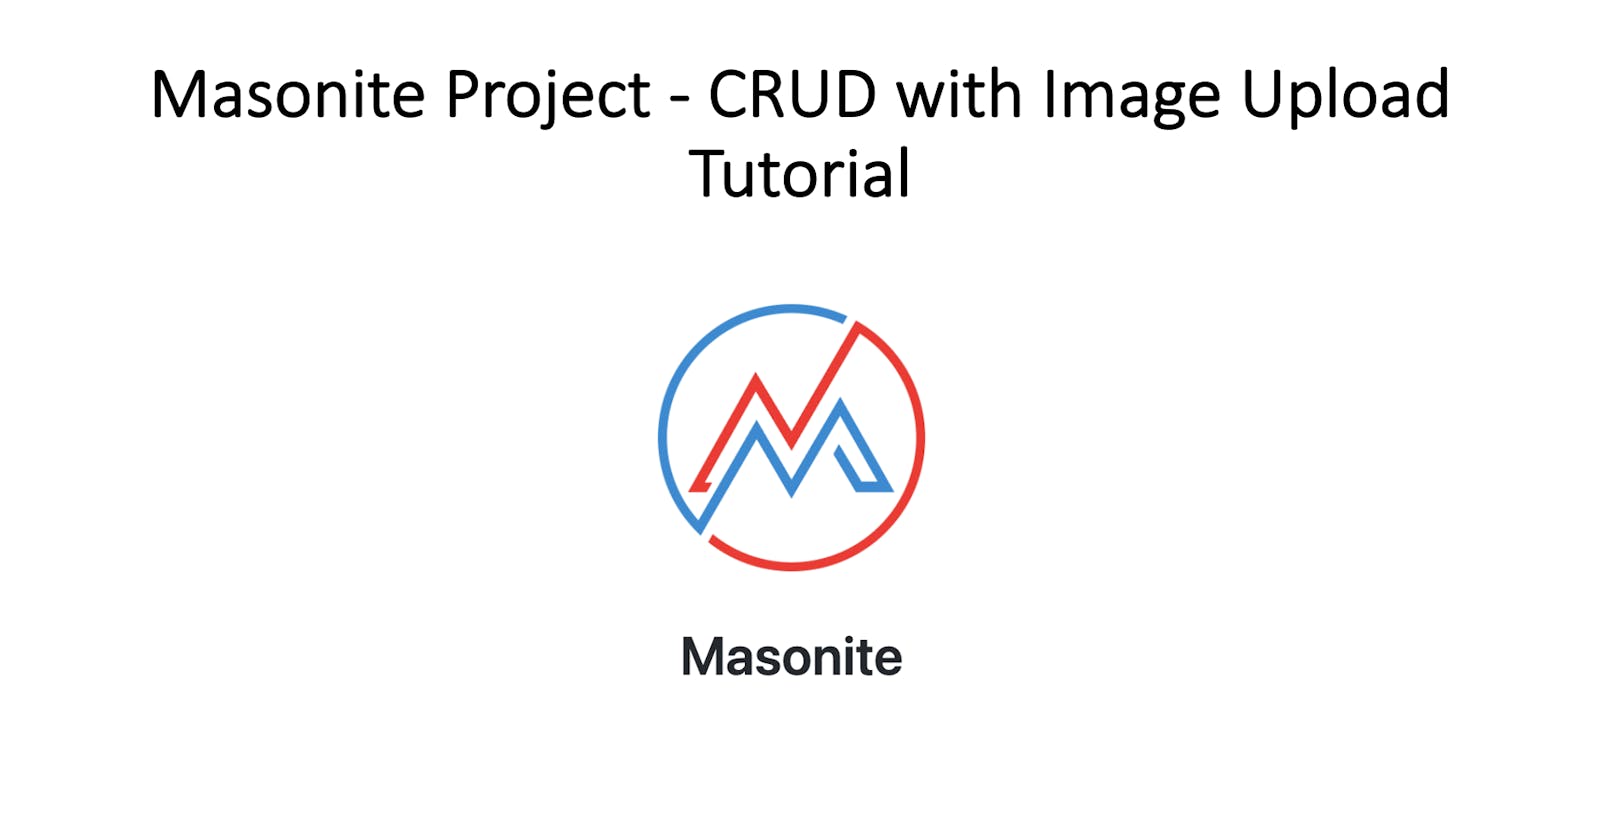 Masonite Project - CRUD with Image Upload Tutorial